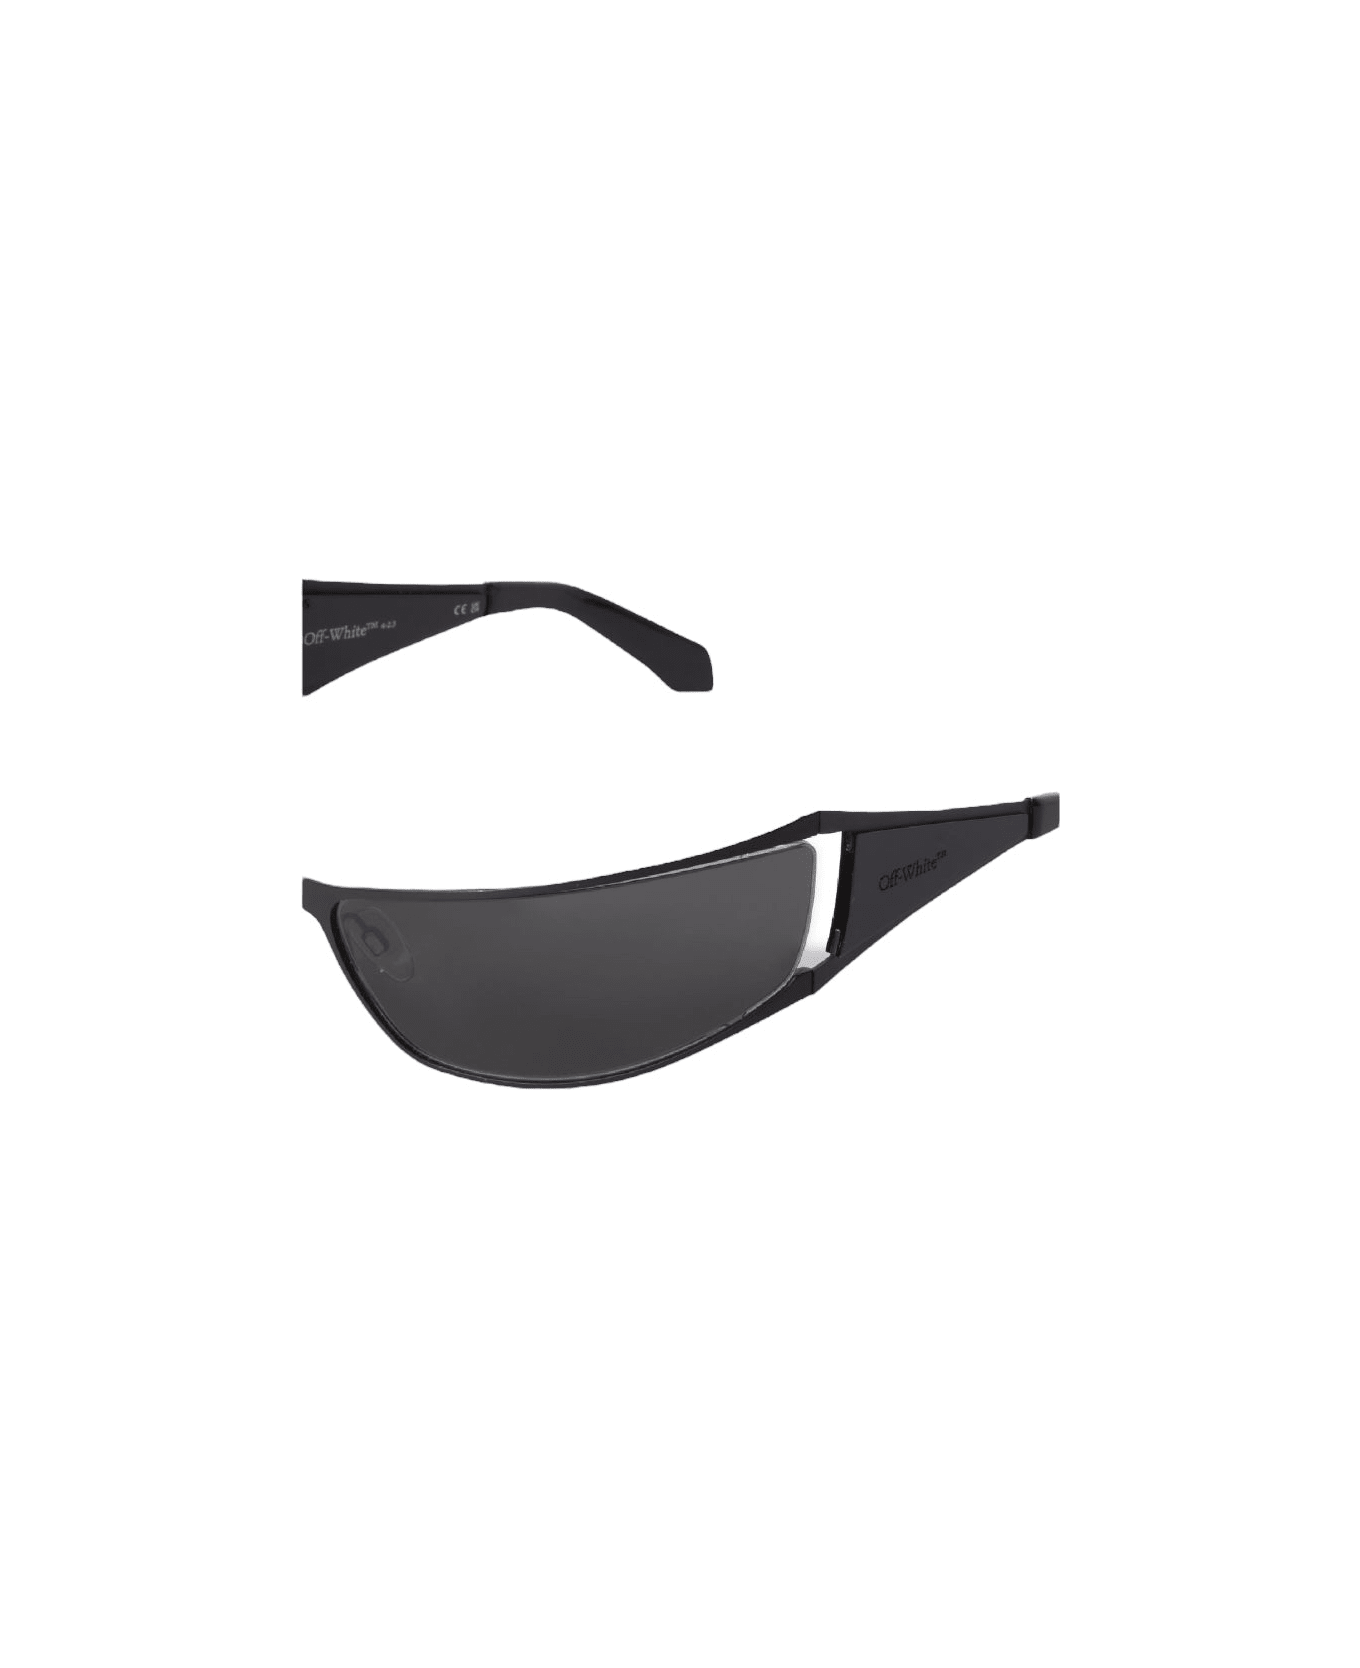 Off-White Luna - Black Sunglasses サングラス